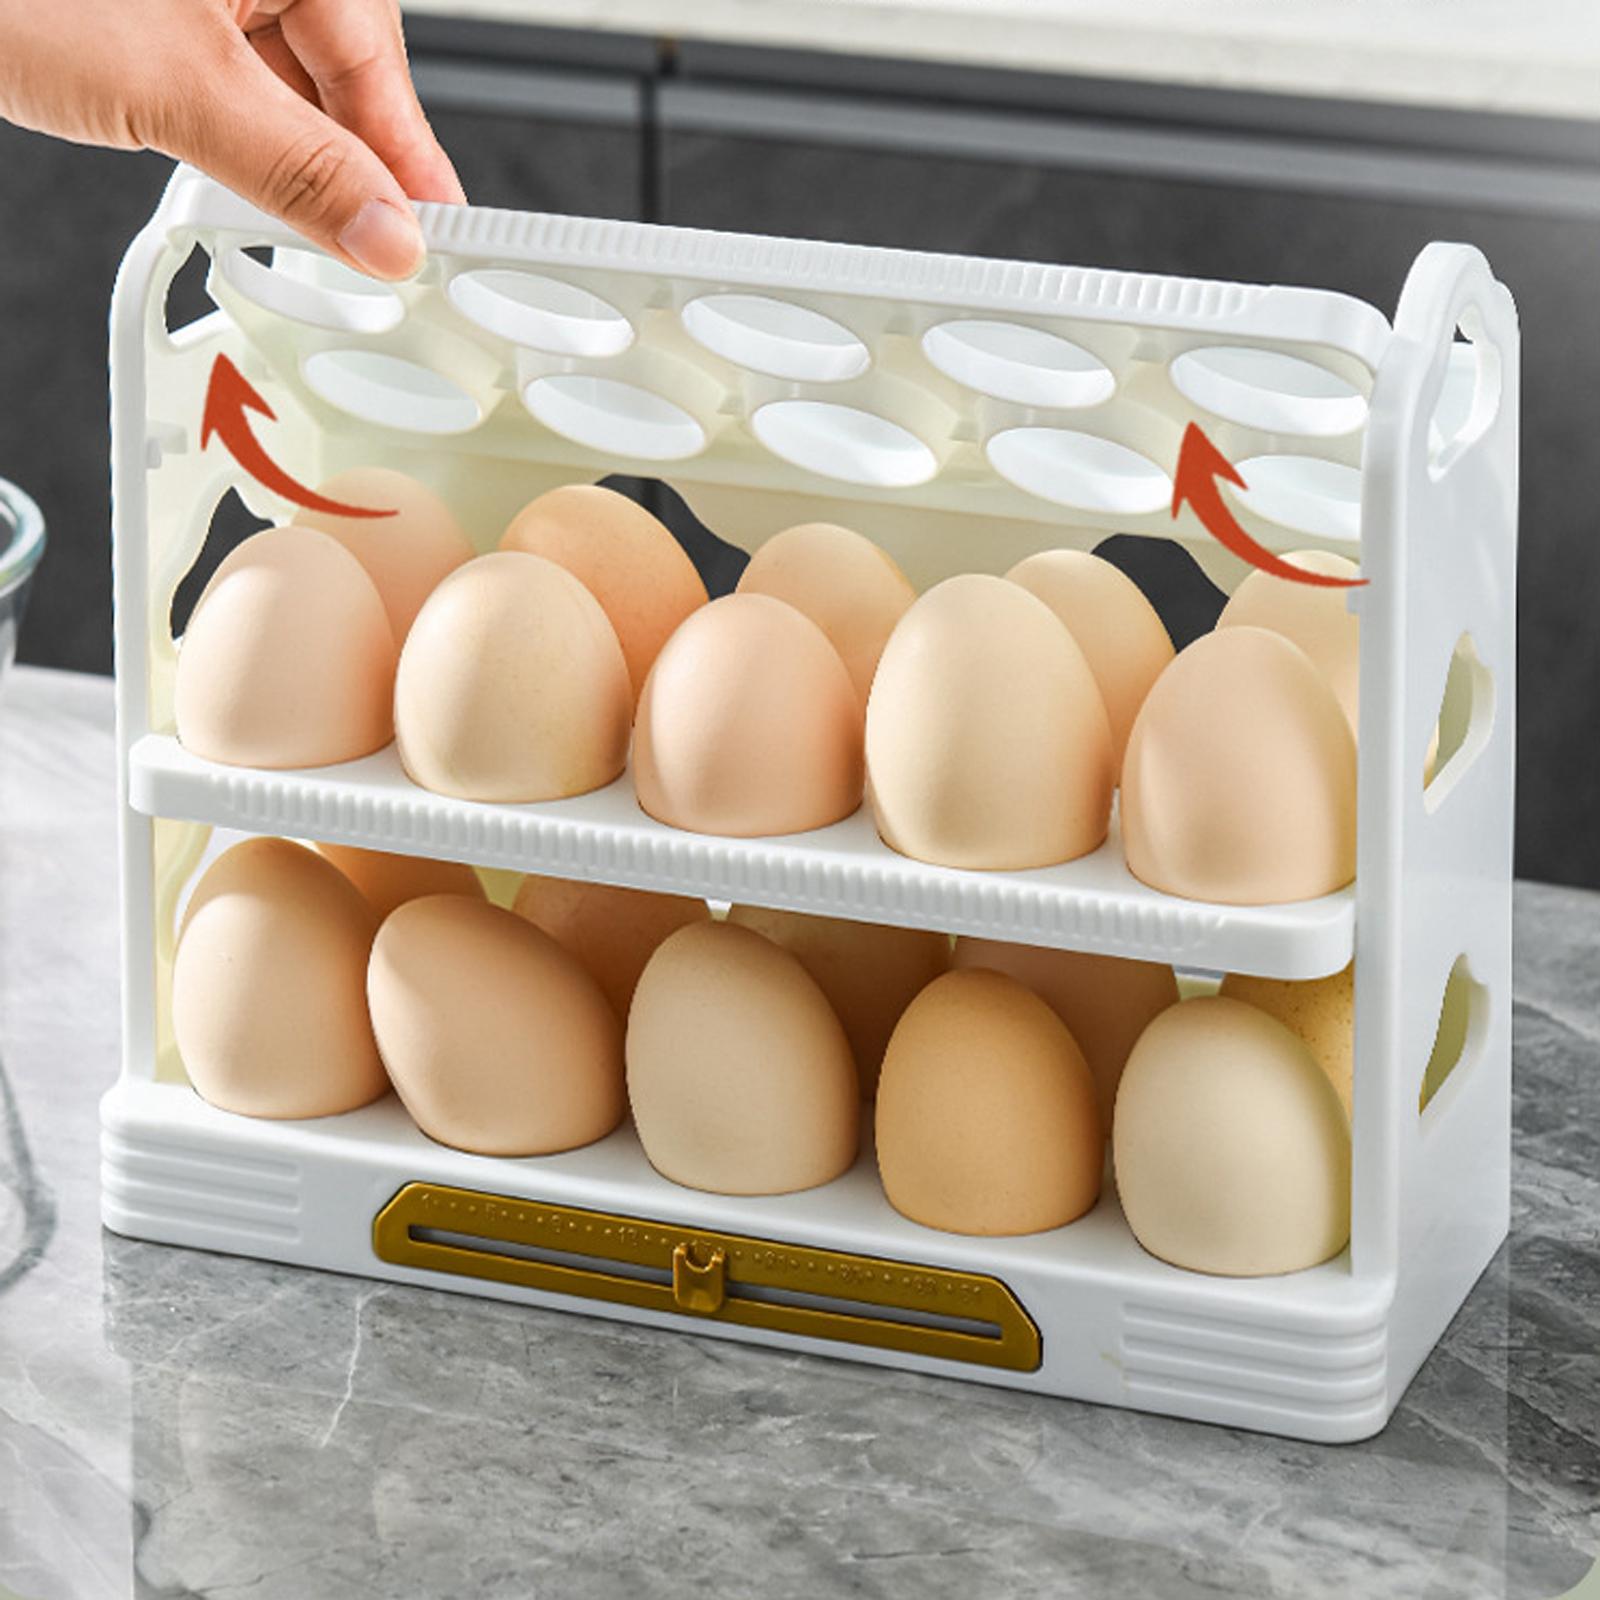 30-grid-egg-holder-rotating-3-tiers-fridge-eggs-organizer